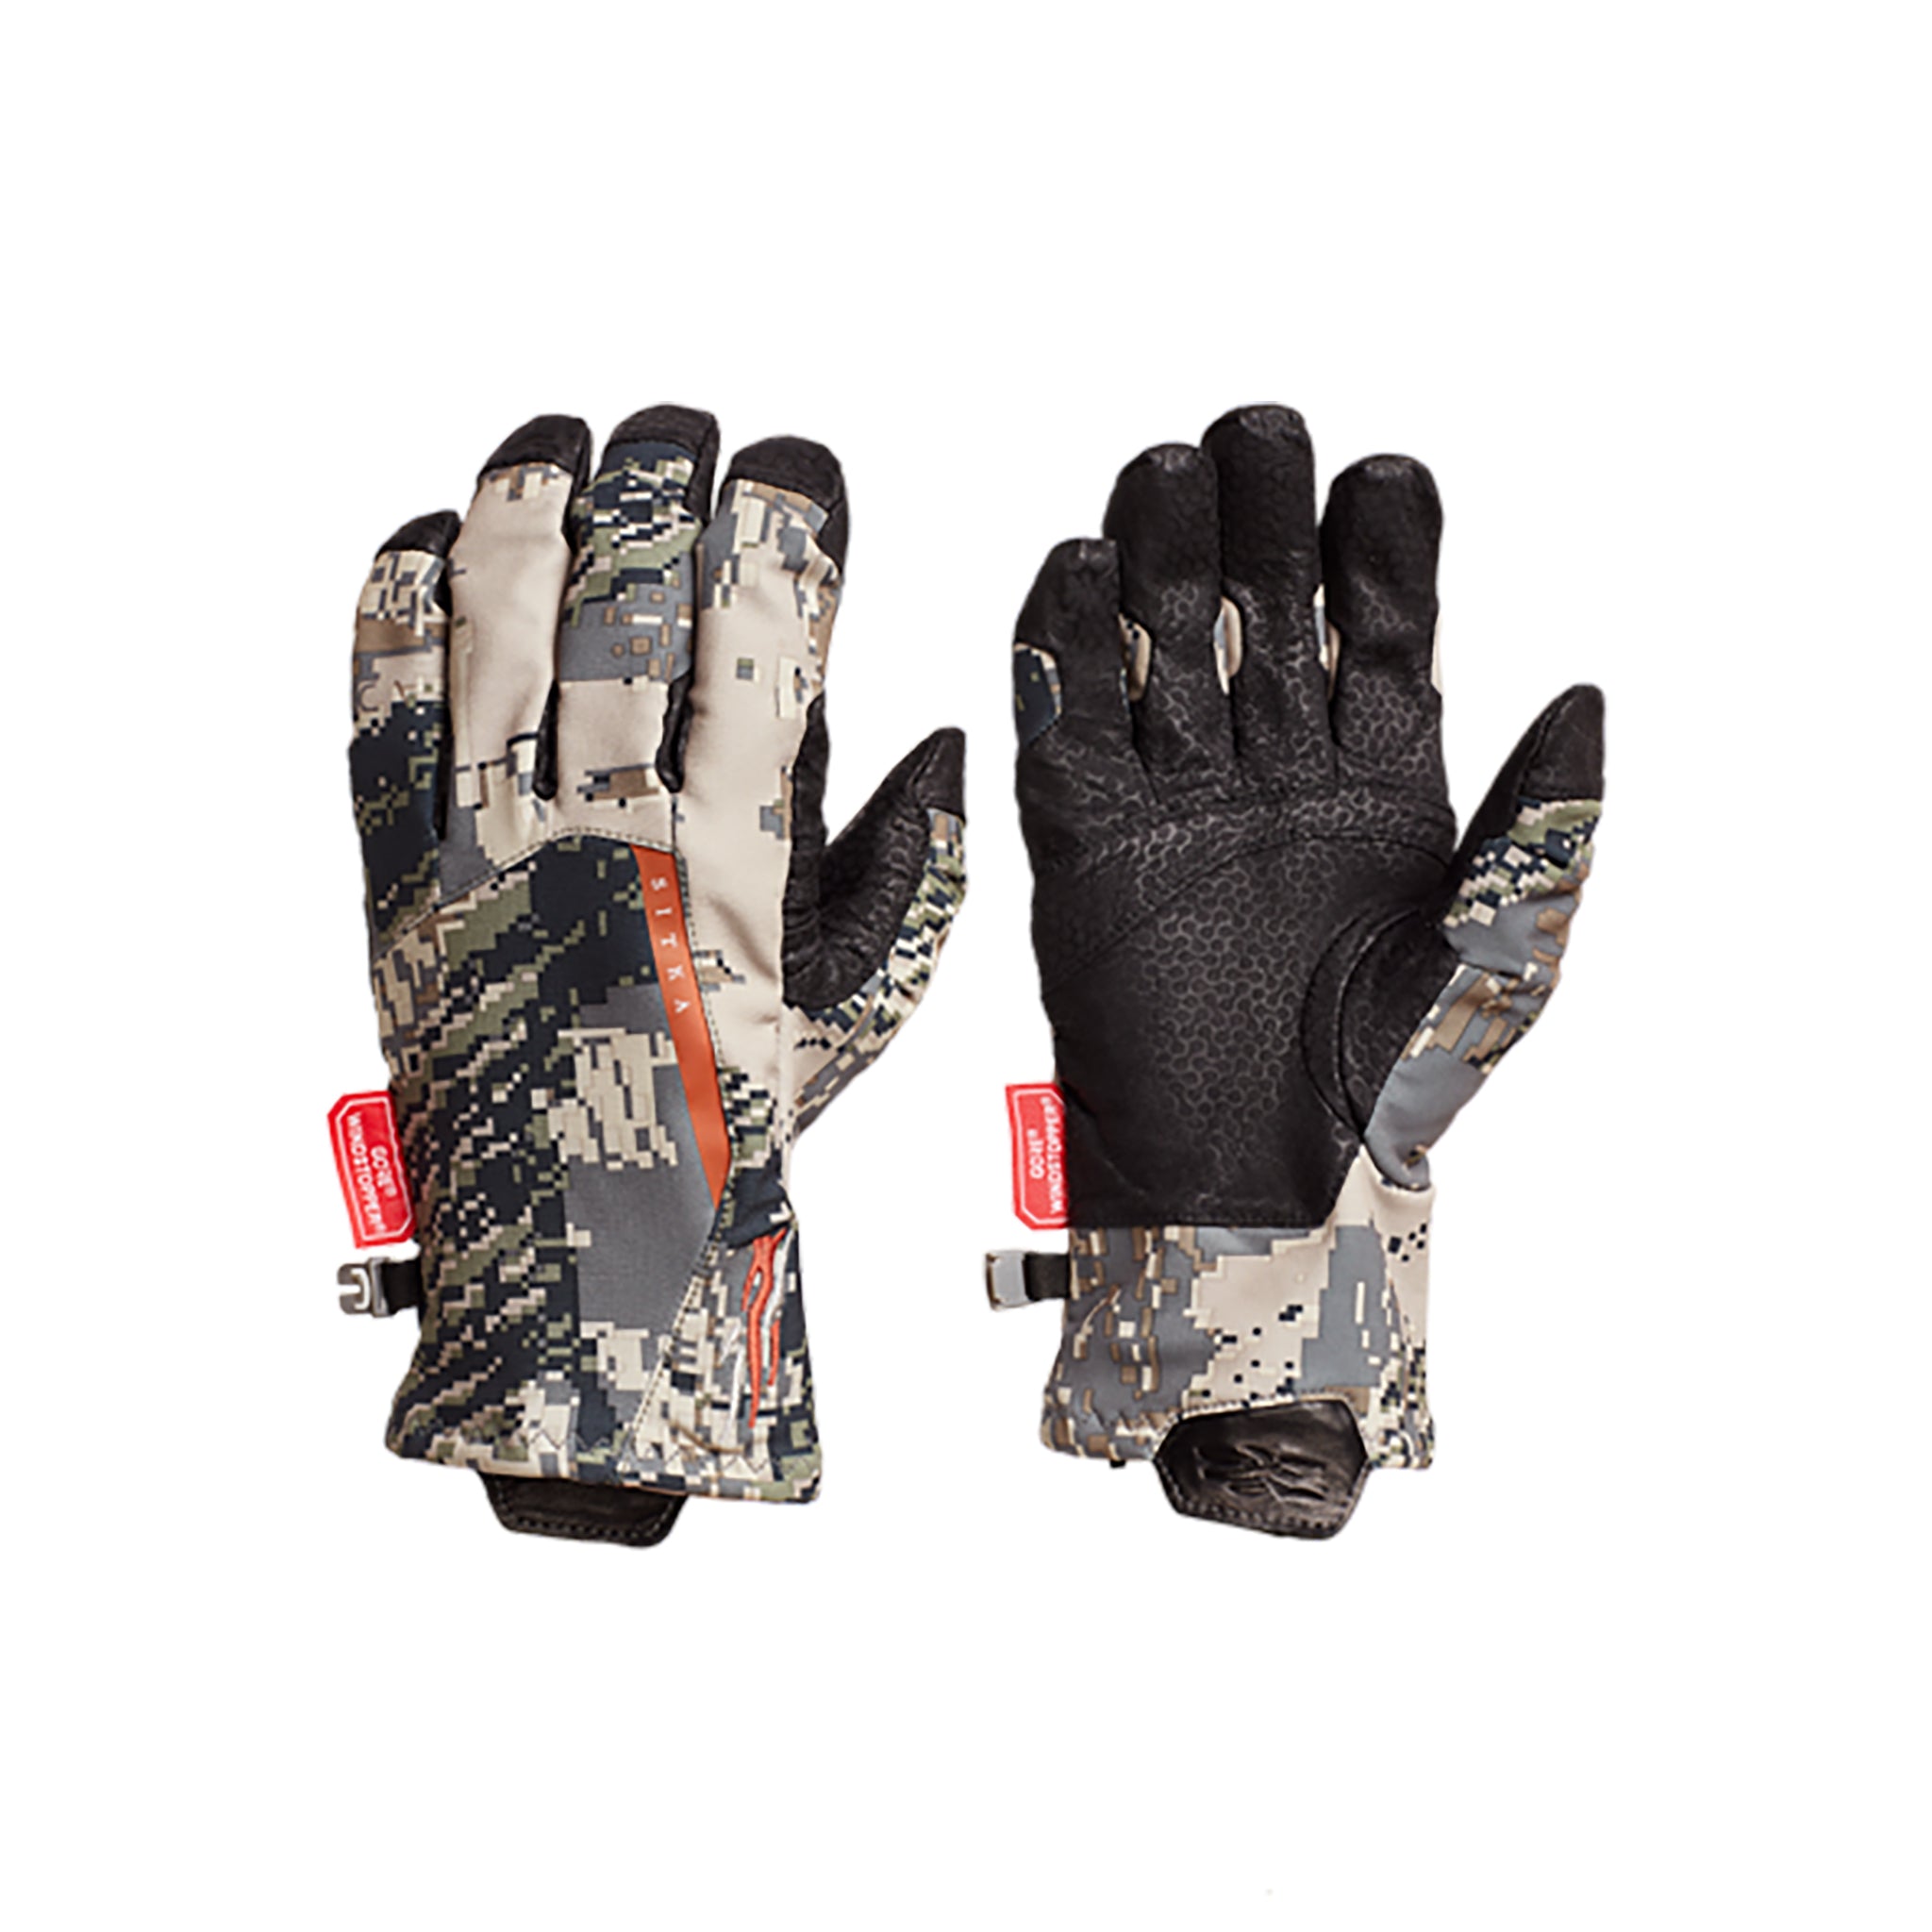 Sitka Gear - Mountain WS Glove Open Country camo - Kenetrek Boots